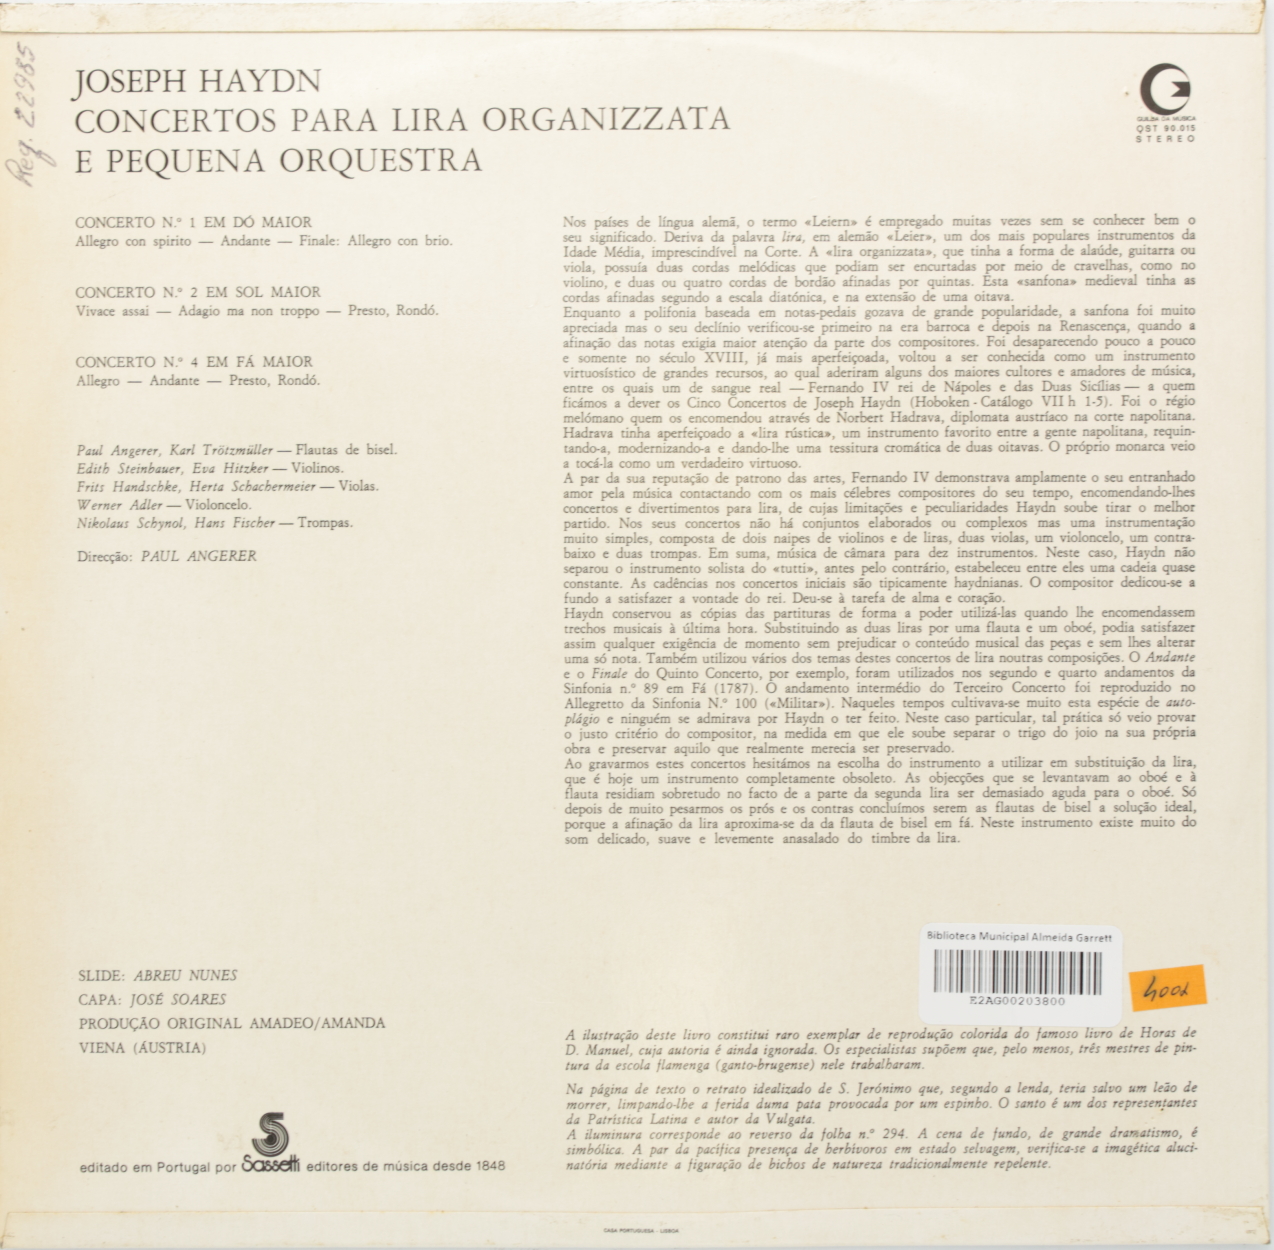 Haydn: Concertos para Lira e Orquestra